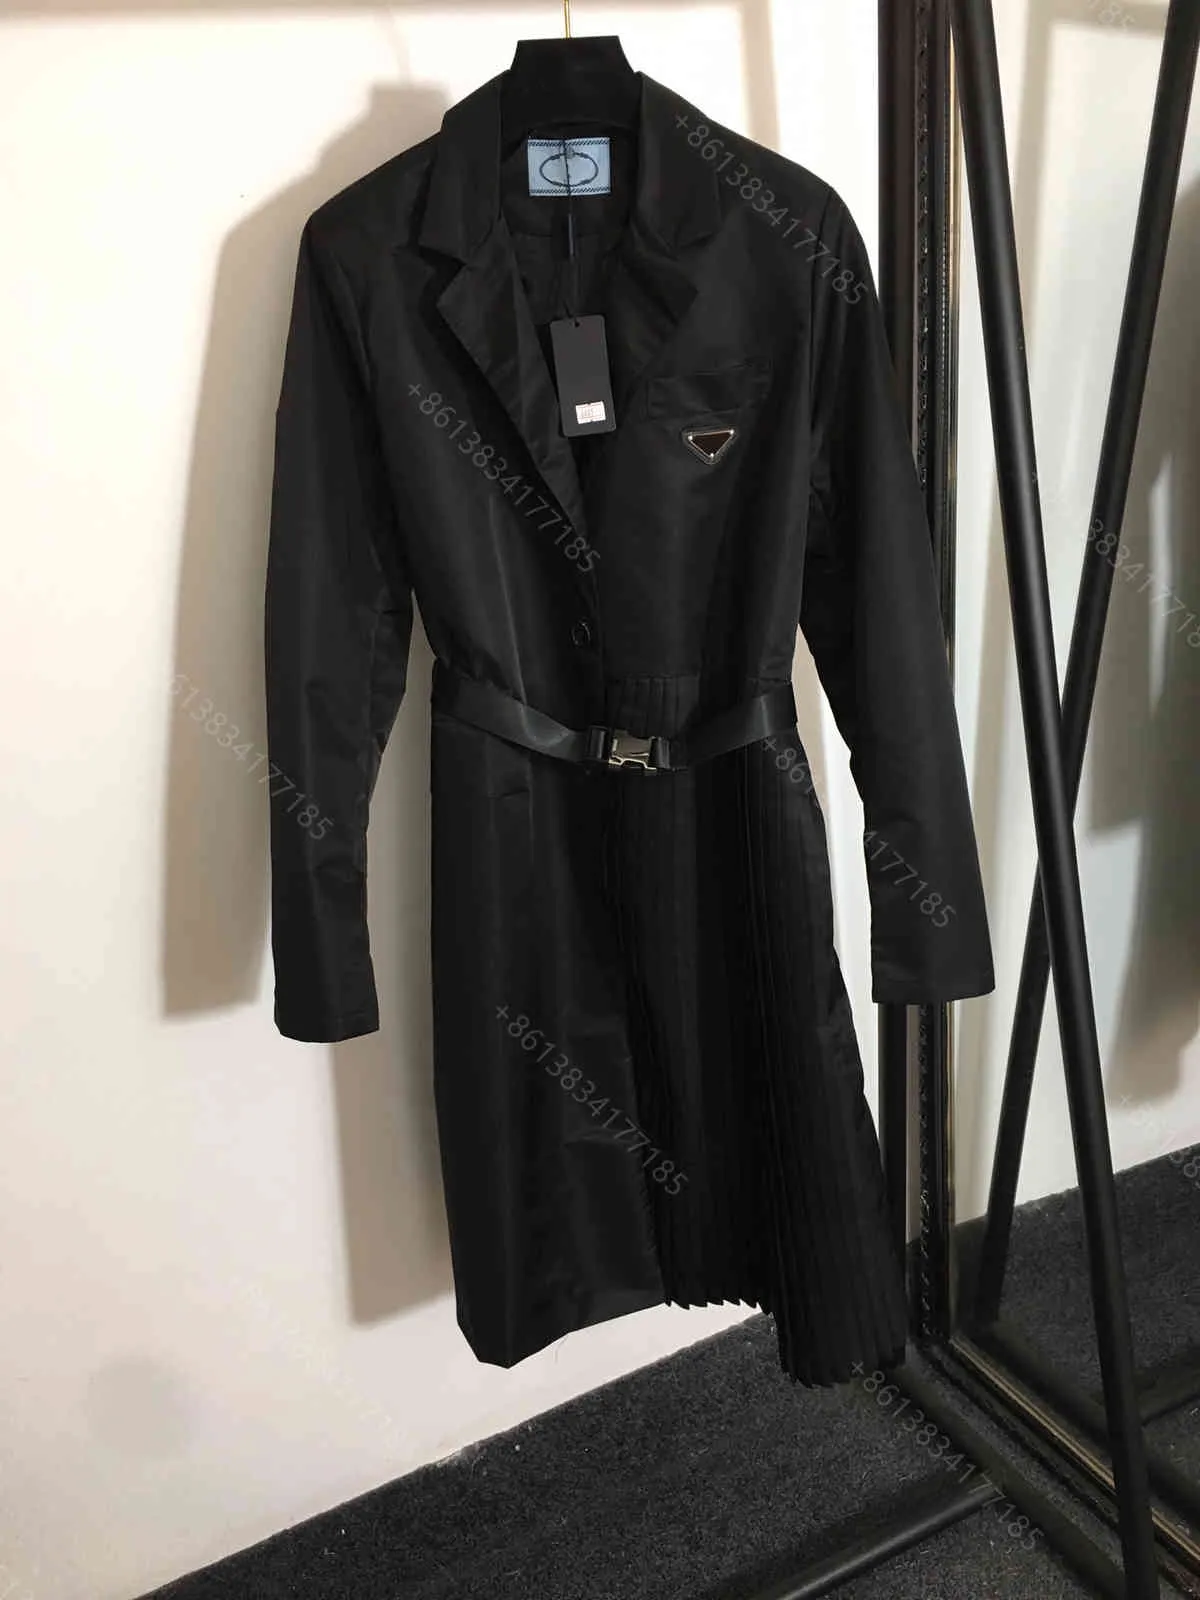 Fashion women winter coat dress long windbreaker high-end black coats belt waistband PD brand cotton lapel tops designer clothes womens wholesale